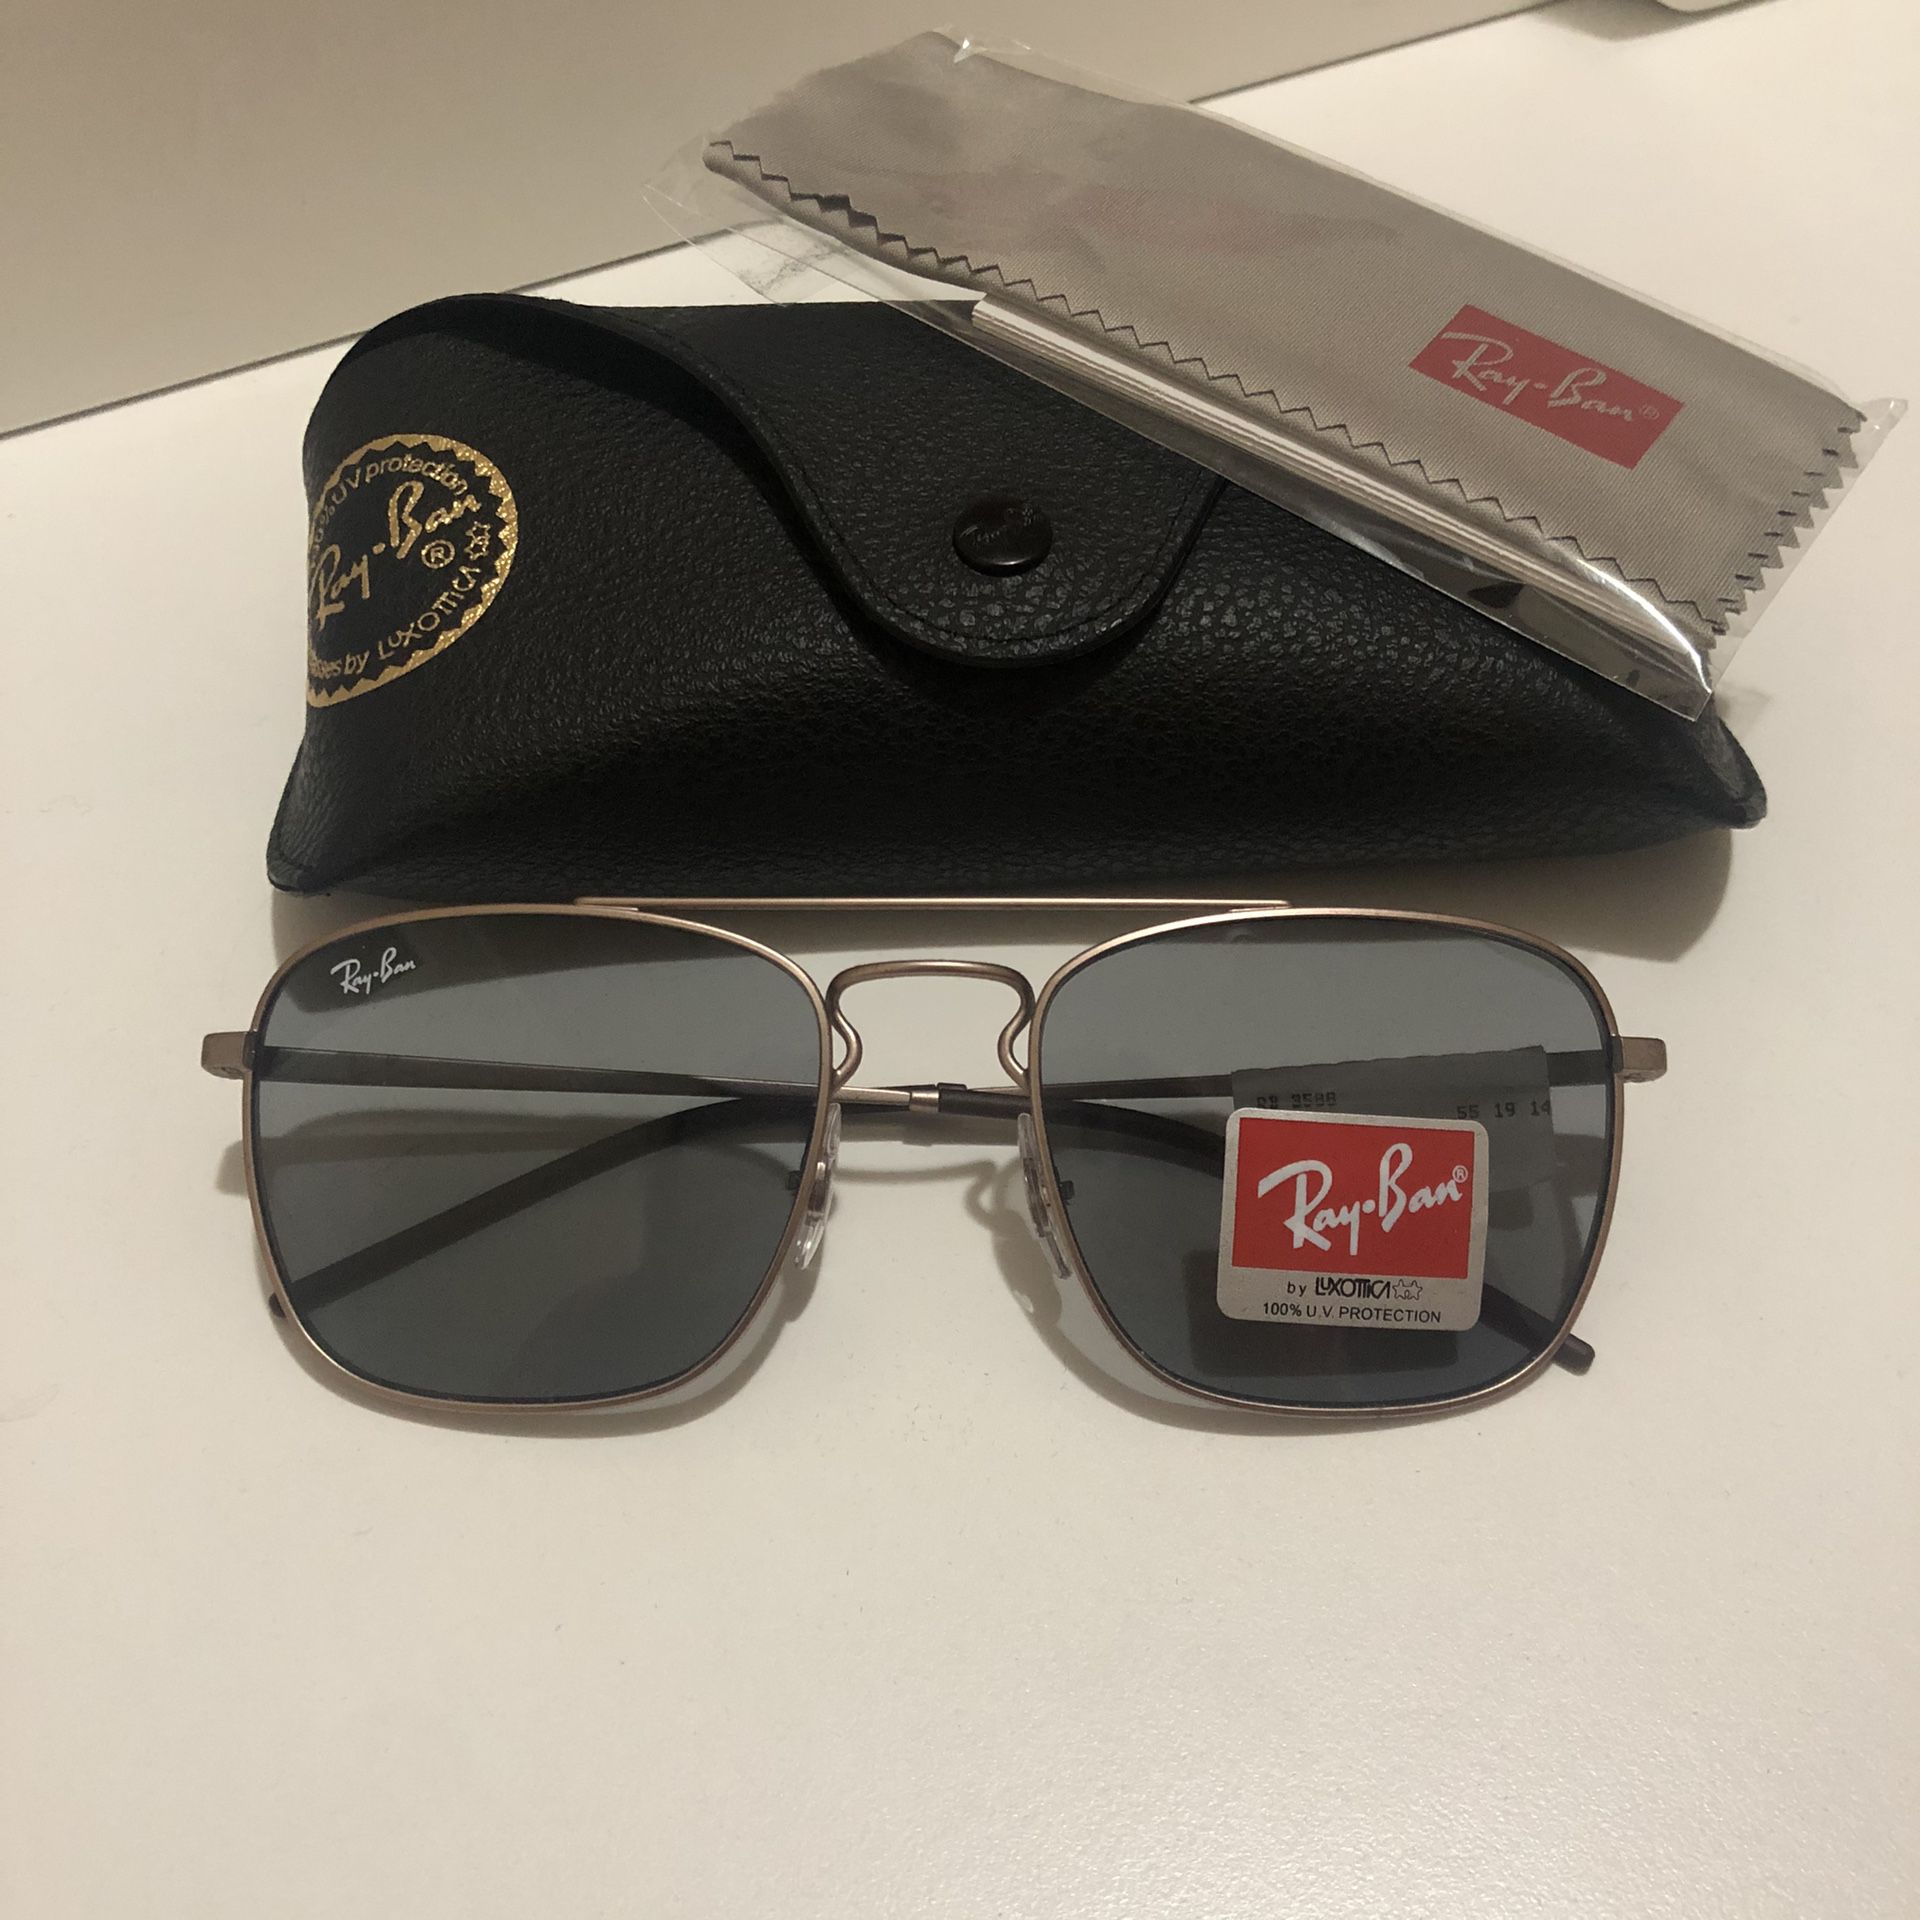 Original Rayban sunglasses